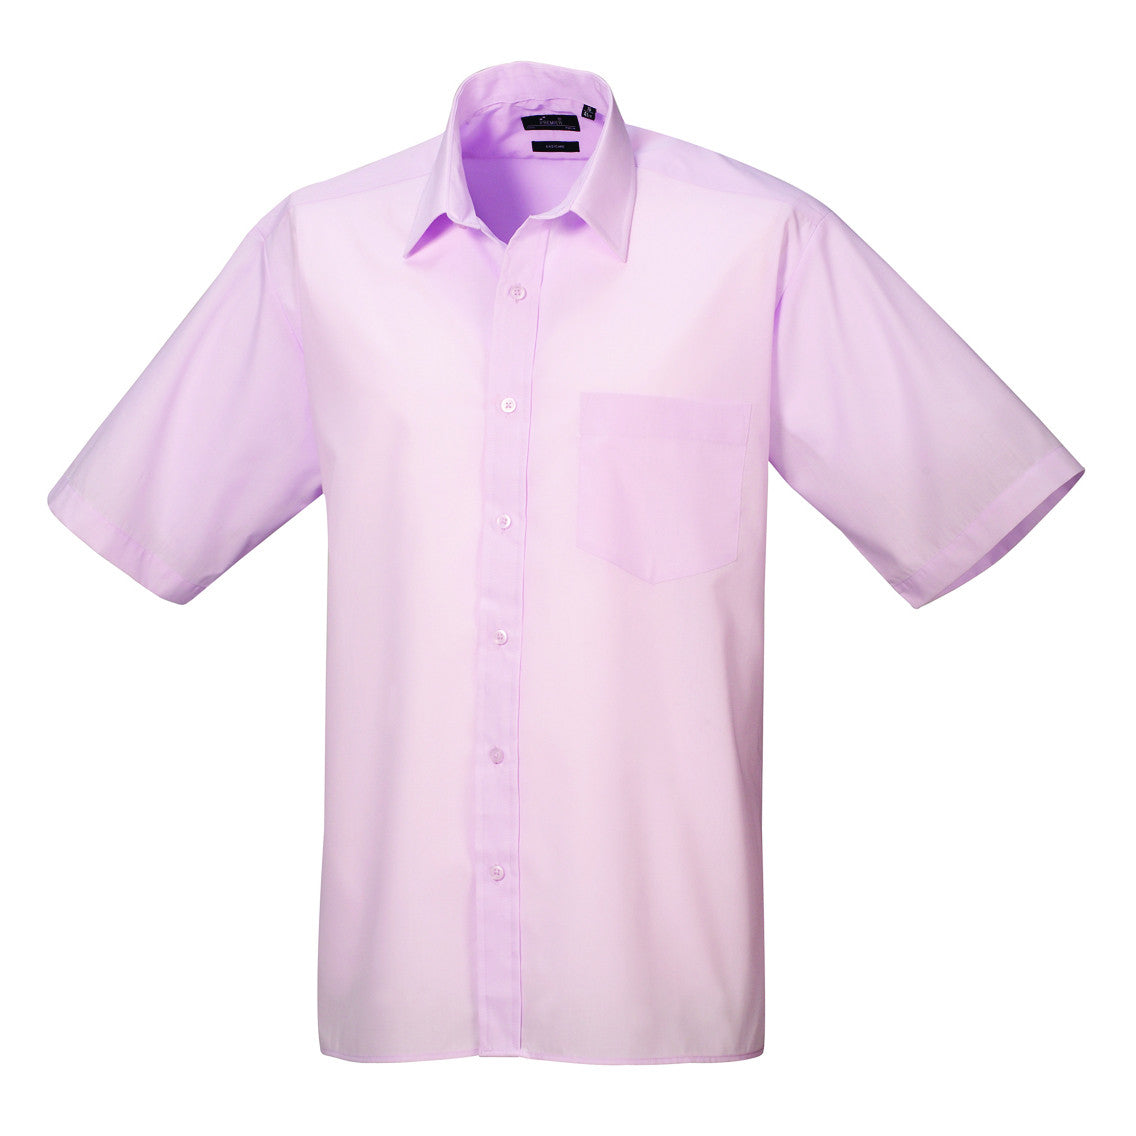 Premier Poplin Shirts (Hot Pink, Pink, Burgundy, Red, Strawberry) - peterdrew.com
 - 8